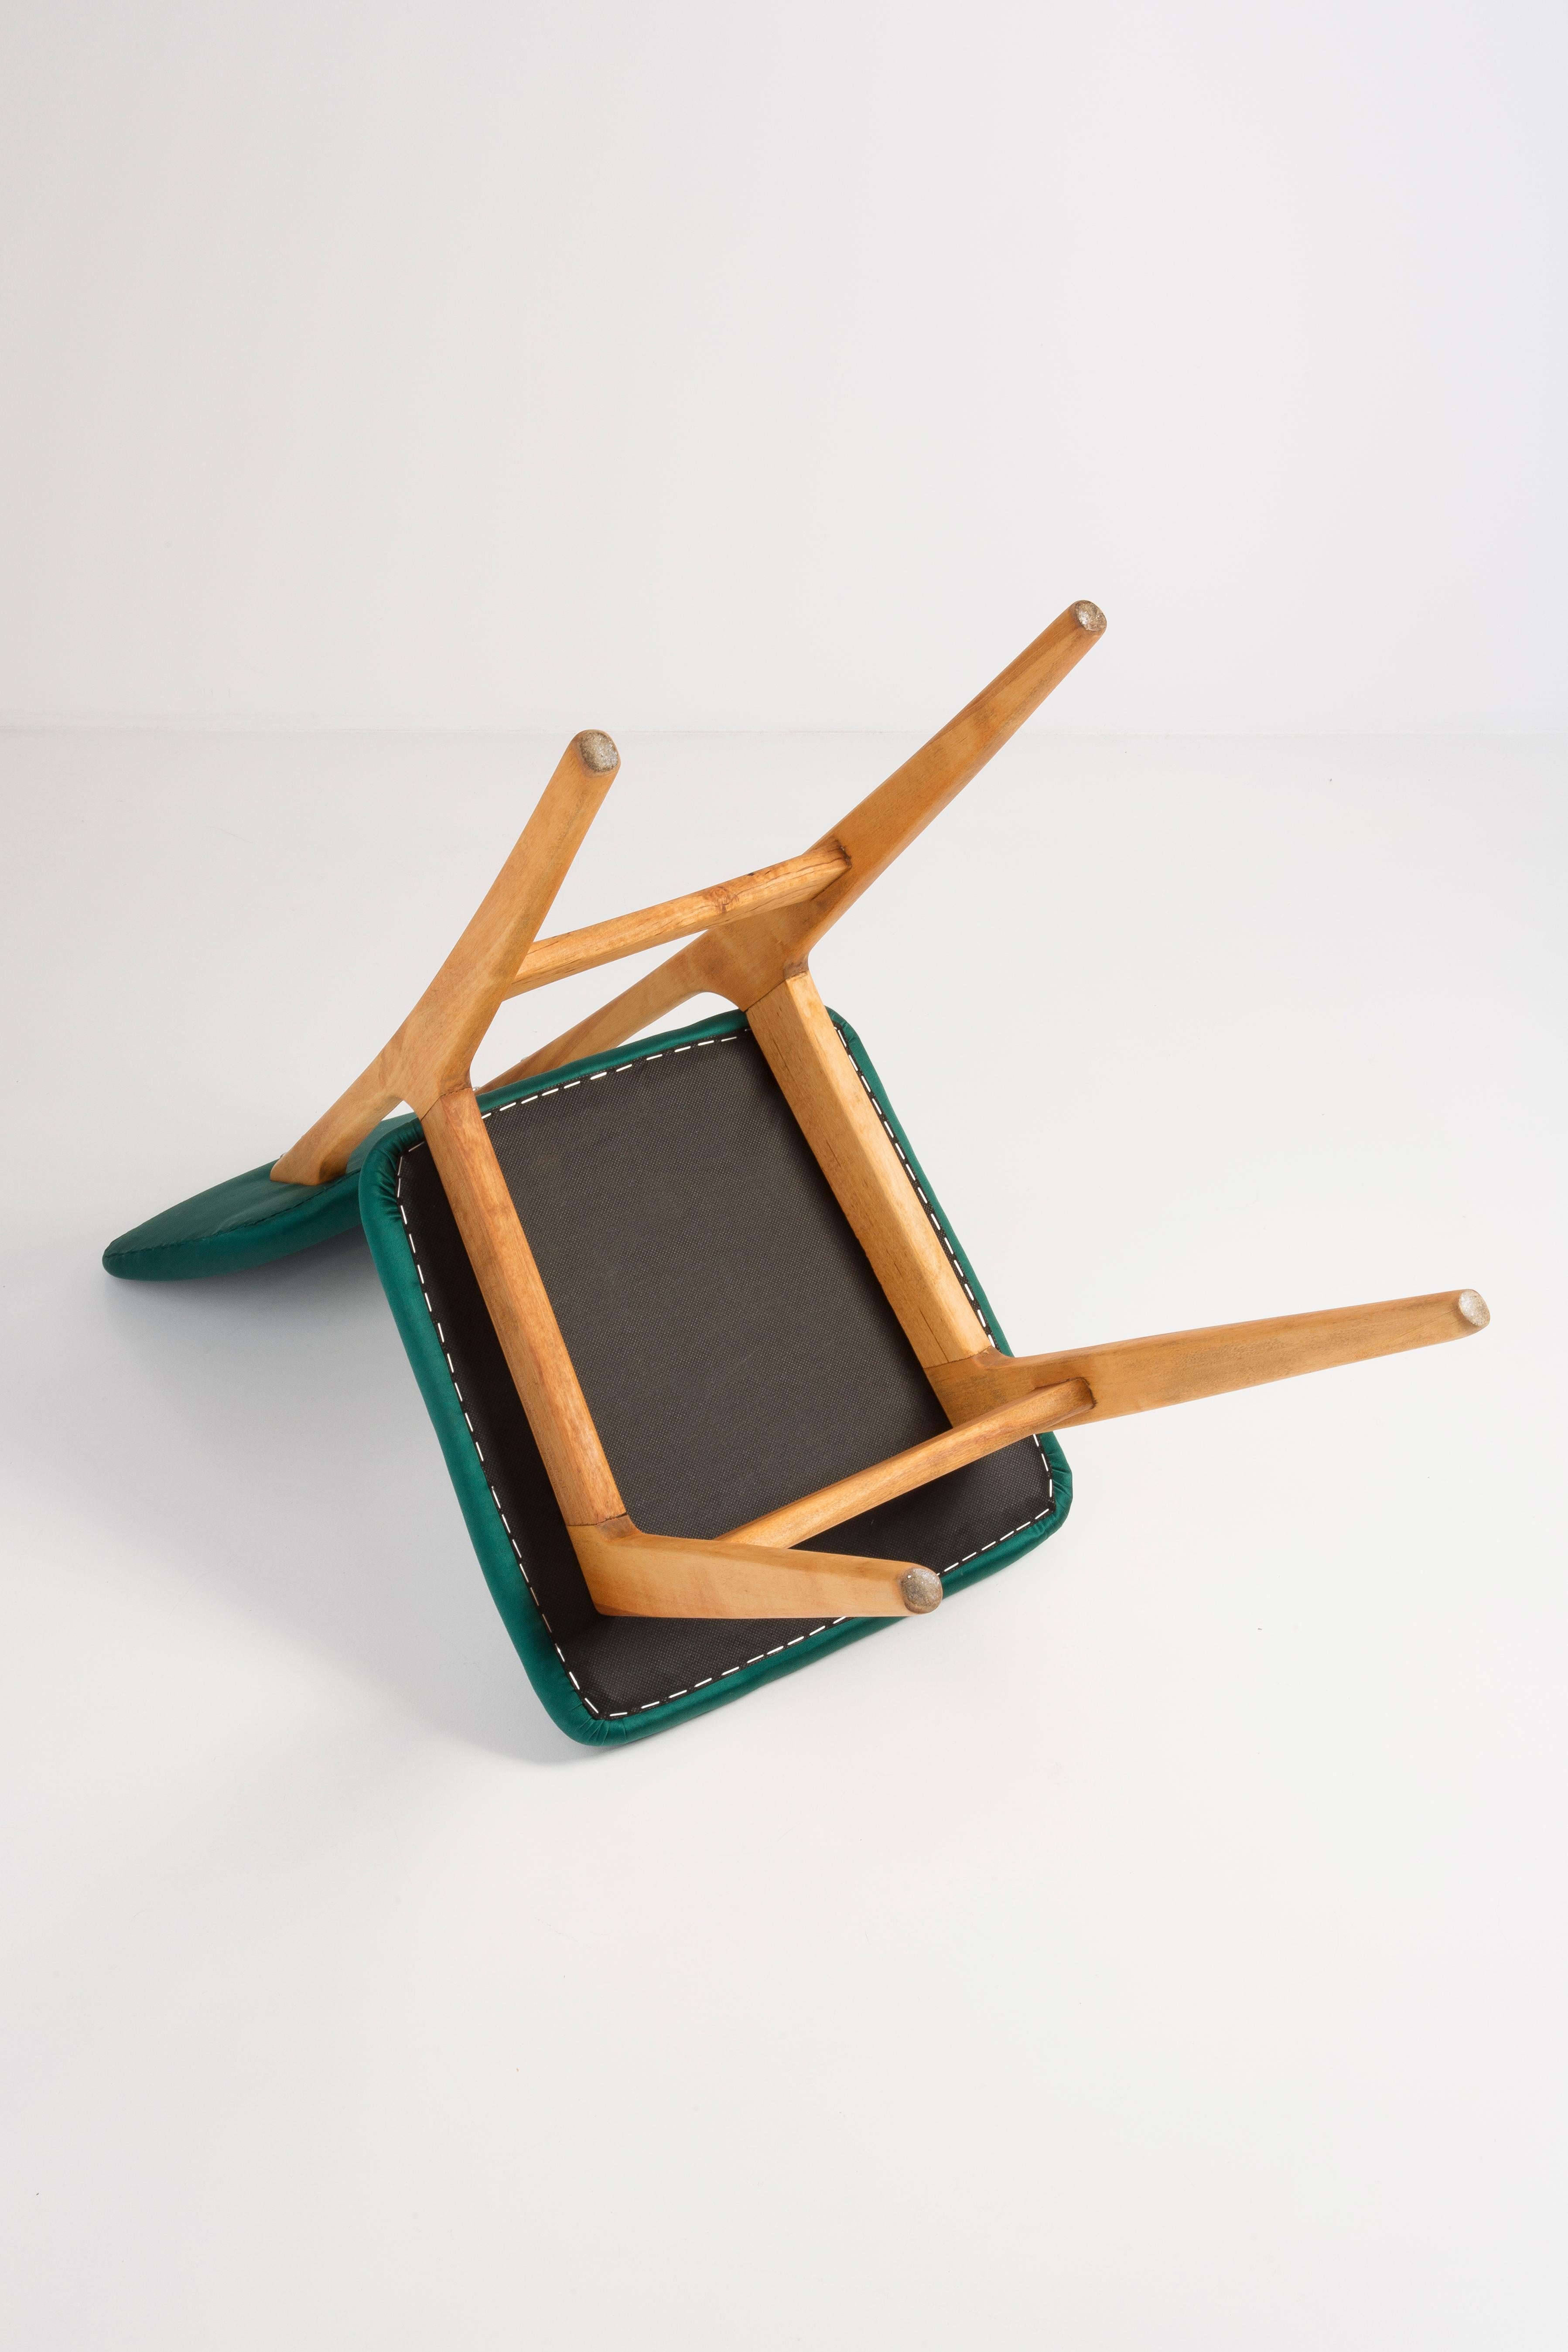 20th Century Dedar Tabularasa Green Chair, 1960s For Sale 5